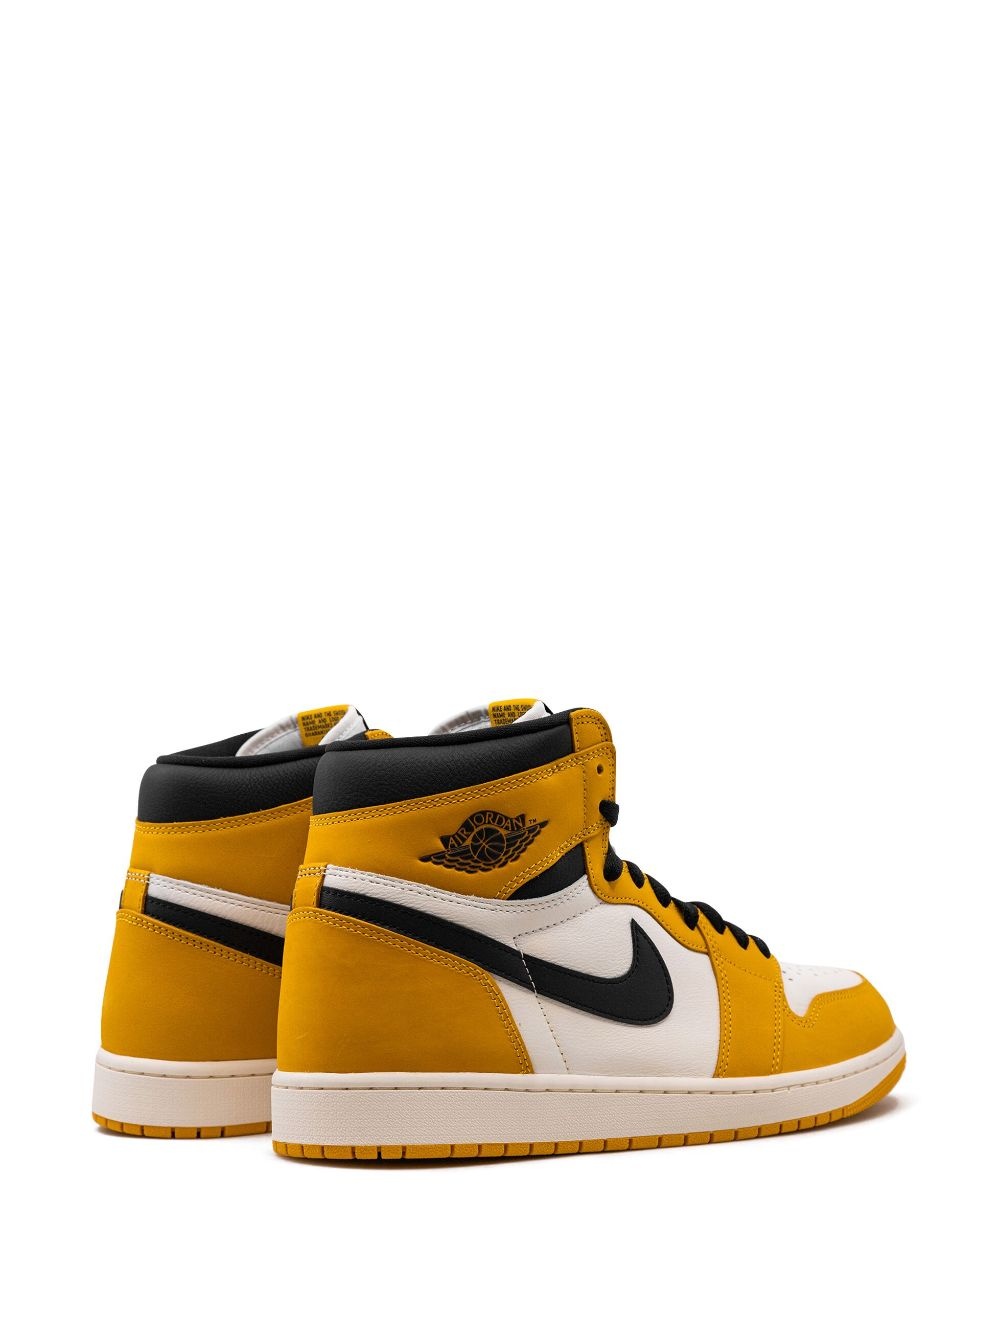 Air Jordan 1 Retro High OG "Yellow Ochre" sneakers - 3